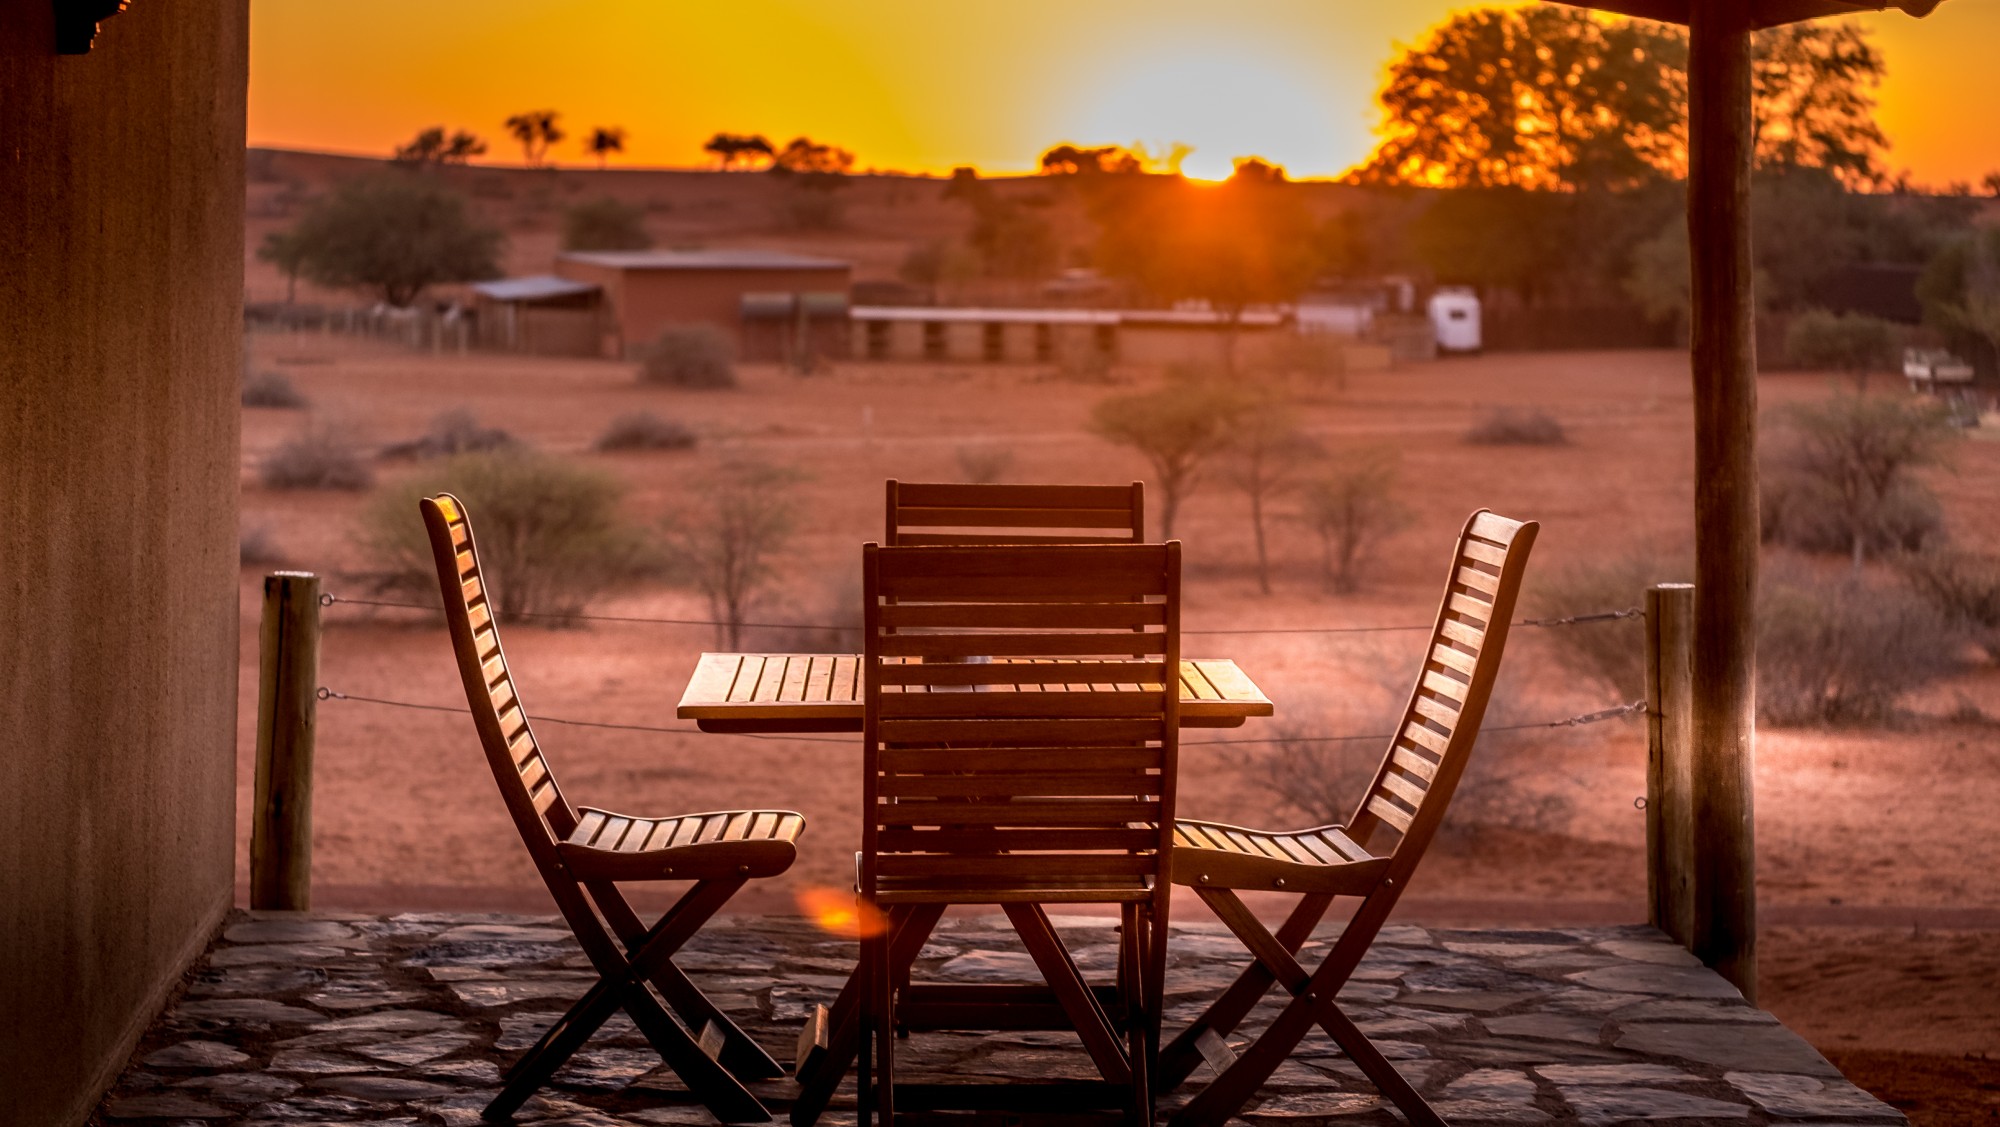 Bagatelle Lodge - Kalahari Game Ranch - Namibia - Guest Room terrace at sunset2